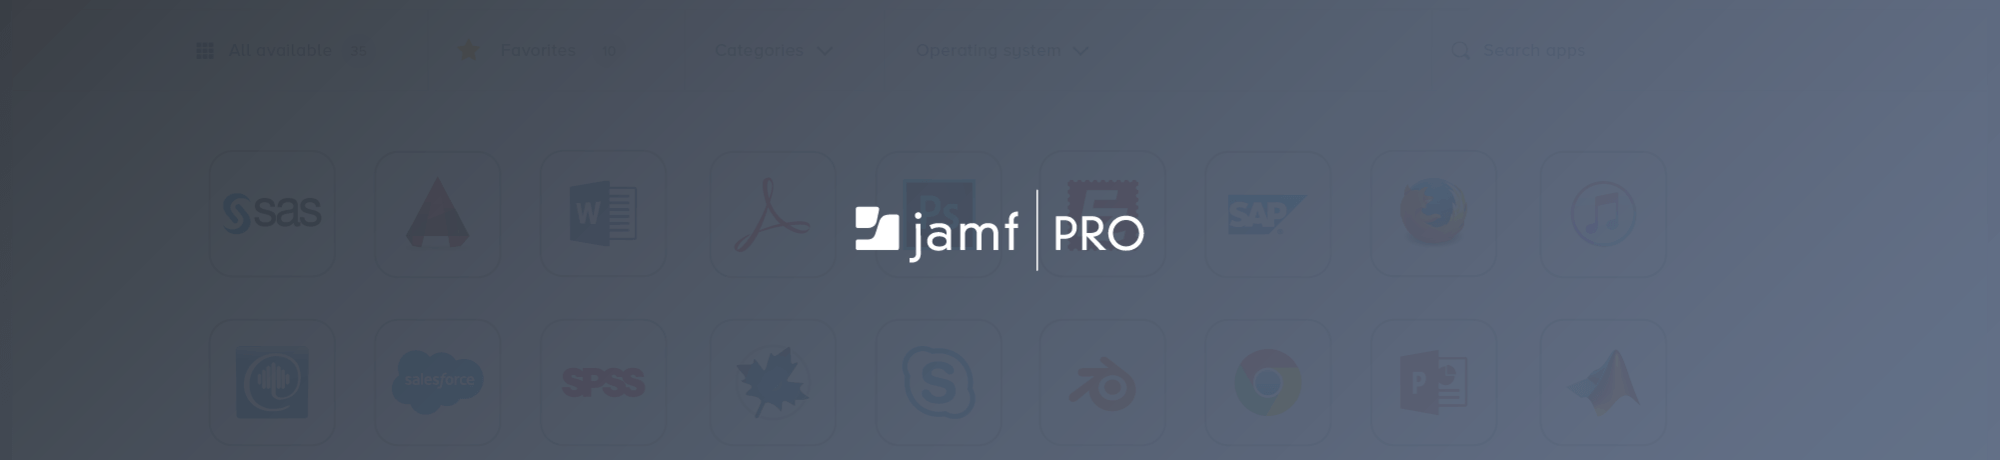 JAMF Logo - Jamf Pro | Software2